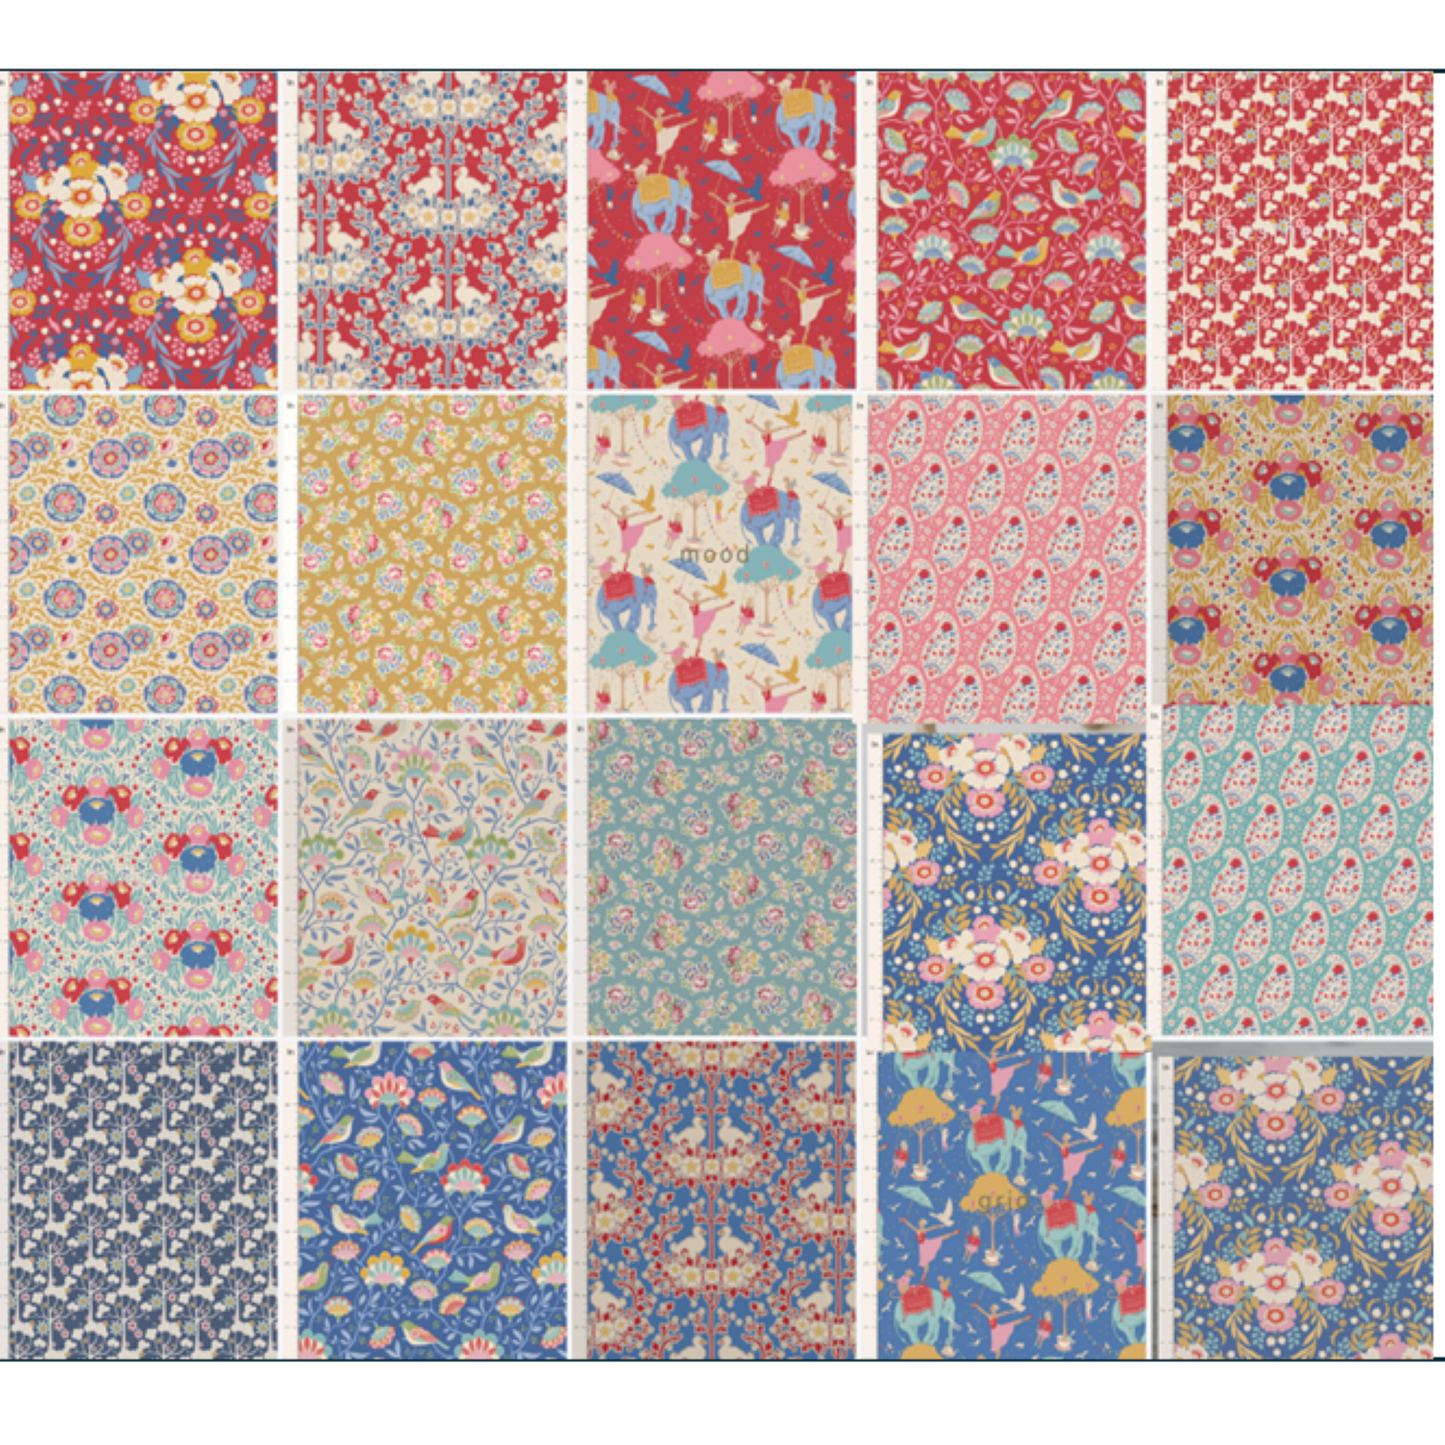 Tilda Jubilee Collection bundle - 20, Fat 16's 10" x 10.5"  cotton quilt fabric